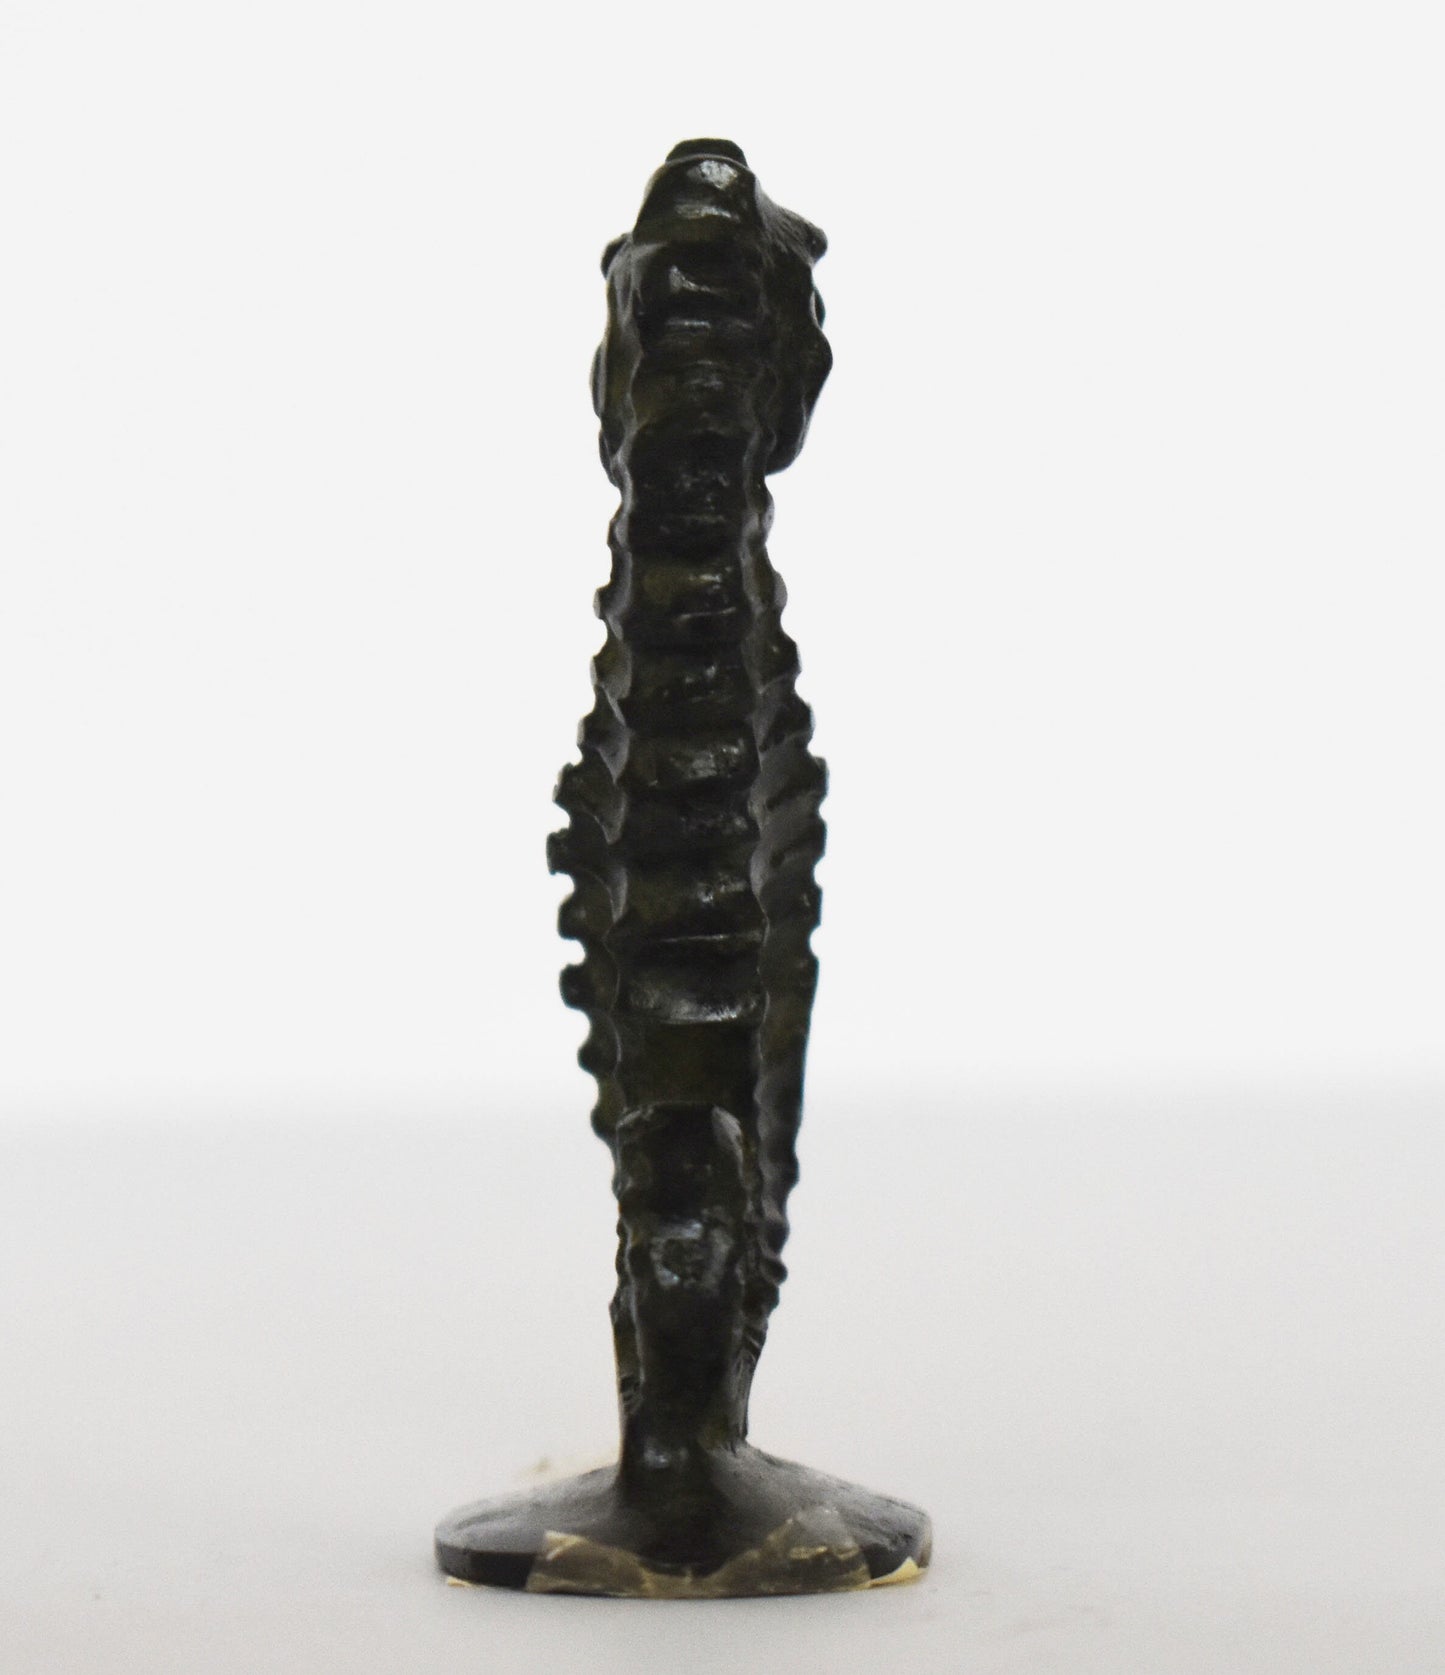 Seahorse - Sea Animal Figurine - pure Bronze Sculpture - Symbol of Poseidon - good luck and protection